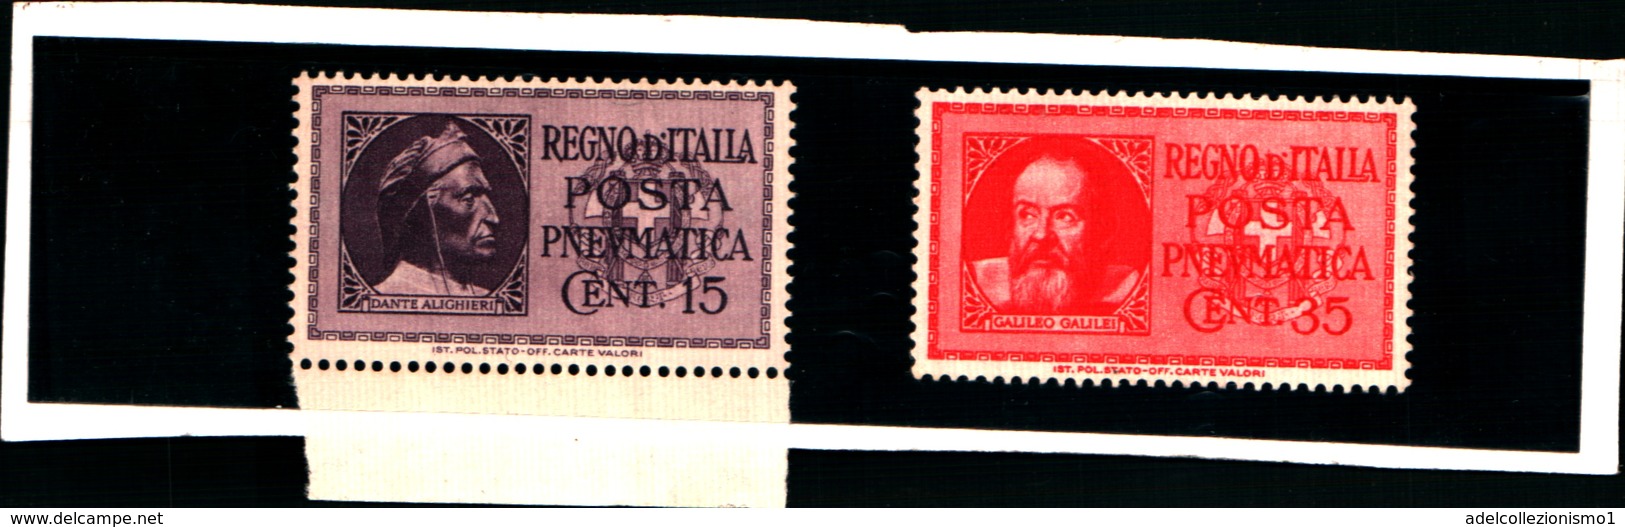 10014) ITALIA-Effigie Di Dante Alighieri E Galileo Galilei - POSTA PNEUMATICA - 29 Marzo 1933-SERIE MNH** - Pneumatische Post